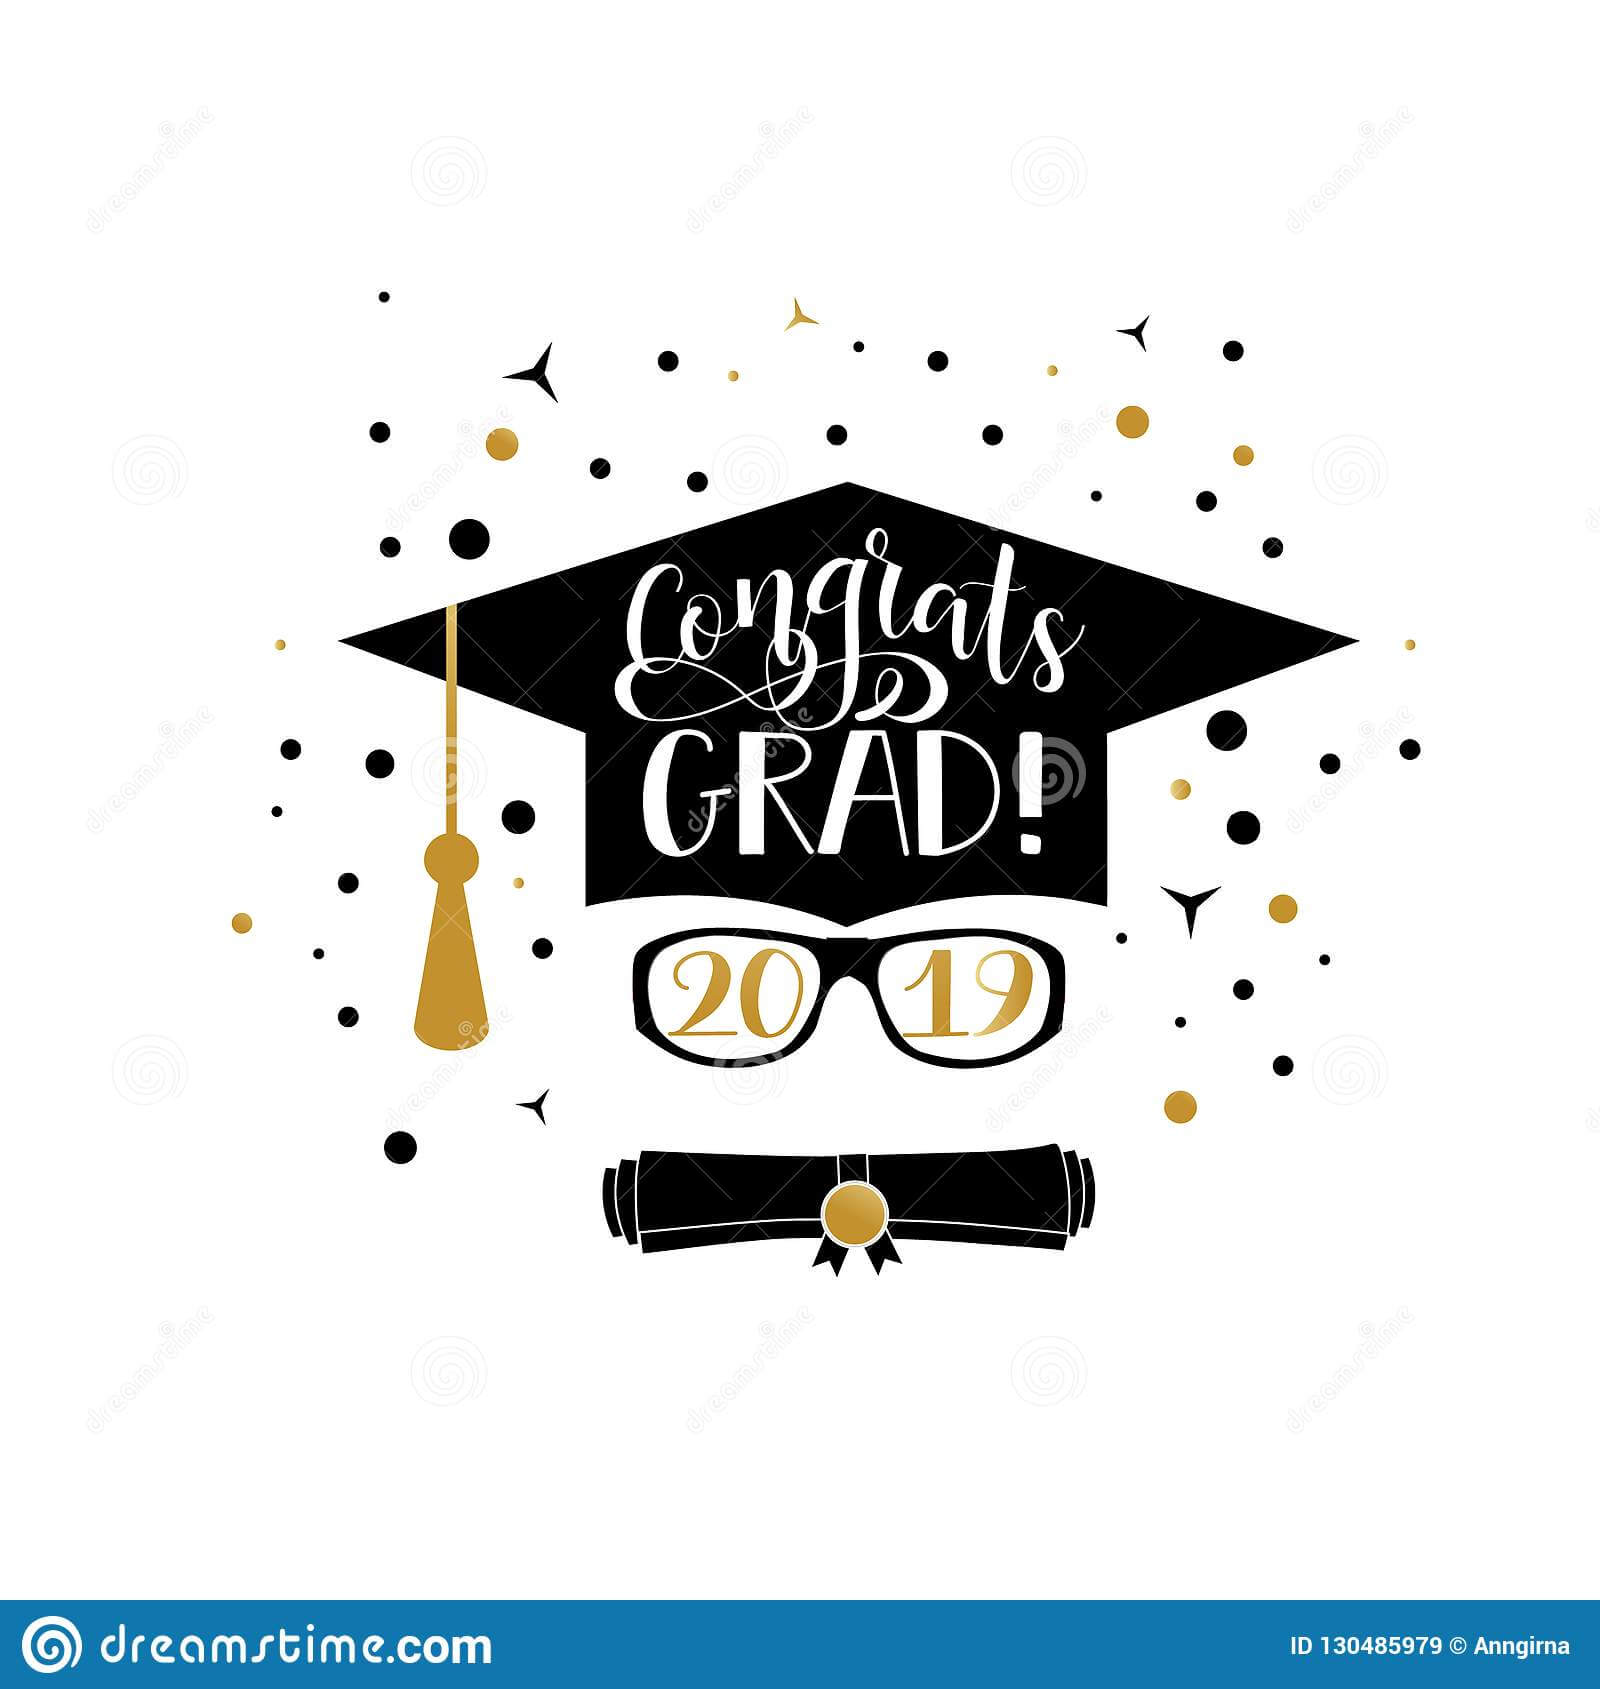 Congrats Grad 2019 Lettering. Congratulations Graduate With Regard To Graduation Banner Template